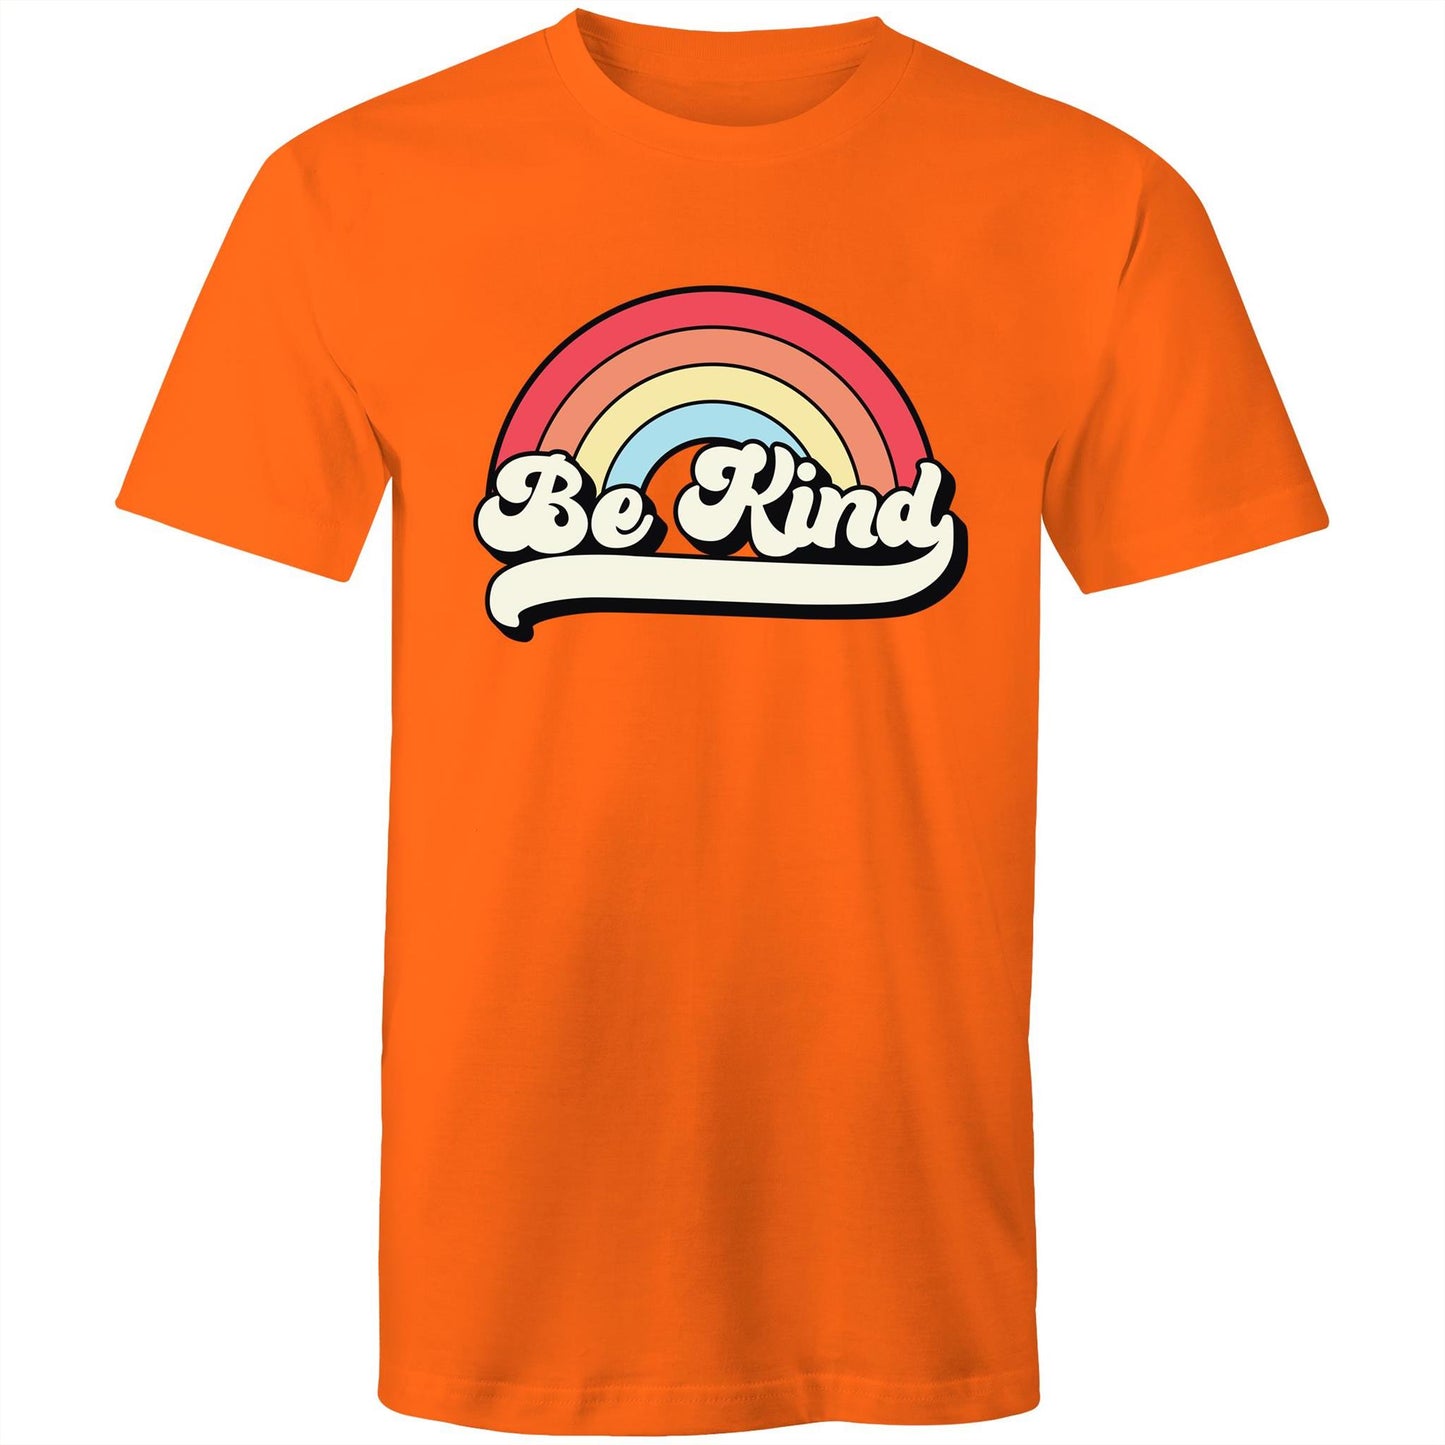 Mens T-Shirt - Be Kind Rainbow